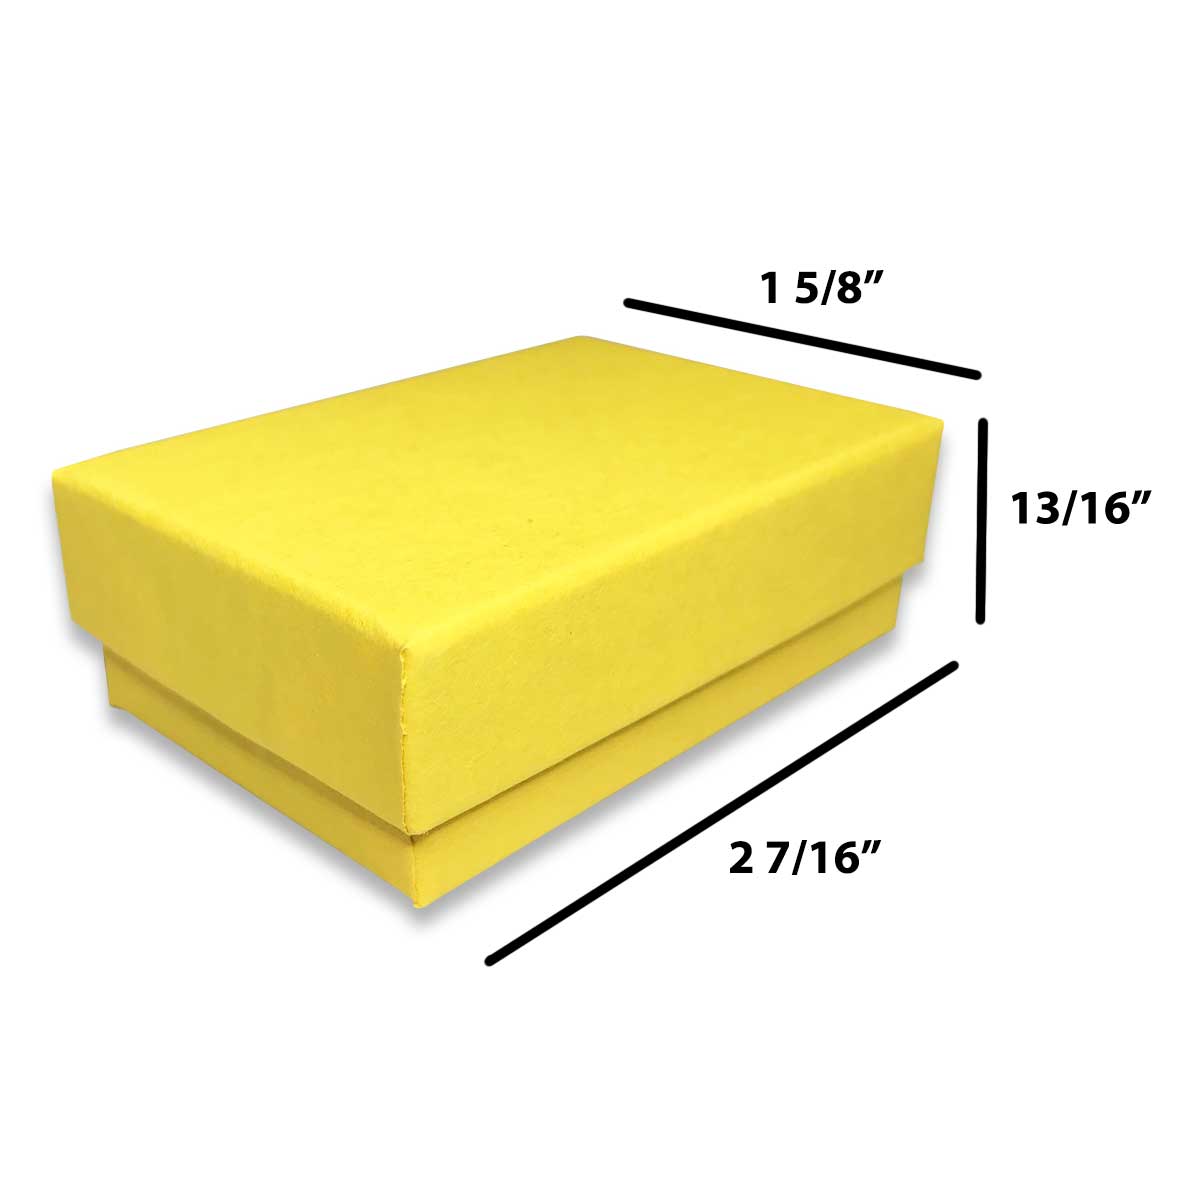 Yellow Kraft Cotton Filled Box 2 7/16" x 1 5/8" x 13/16"H